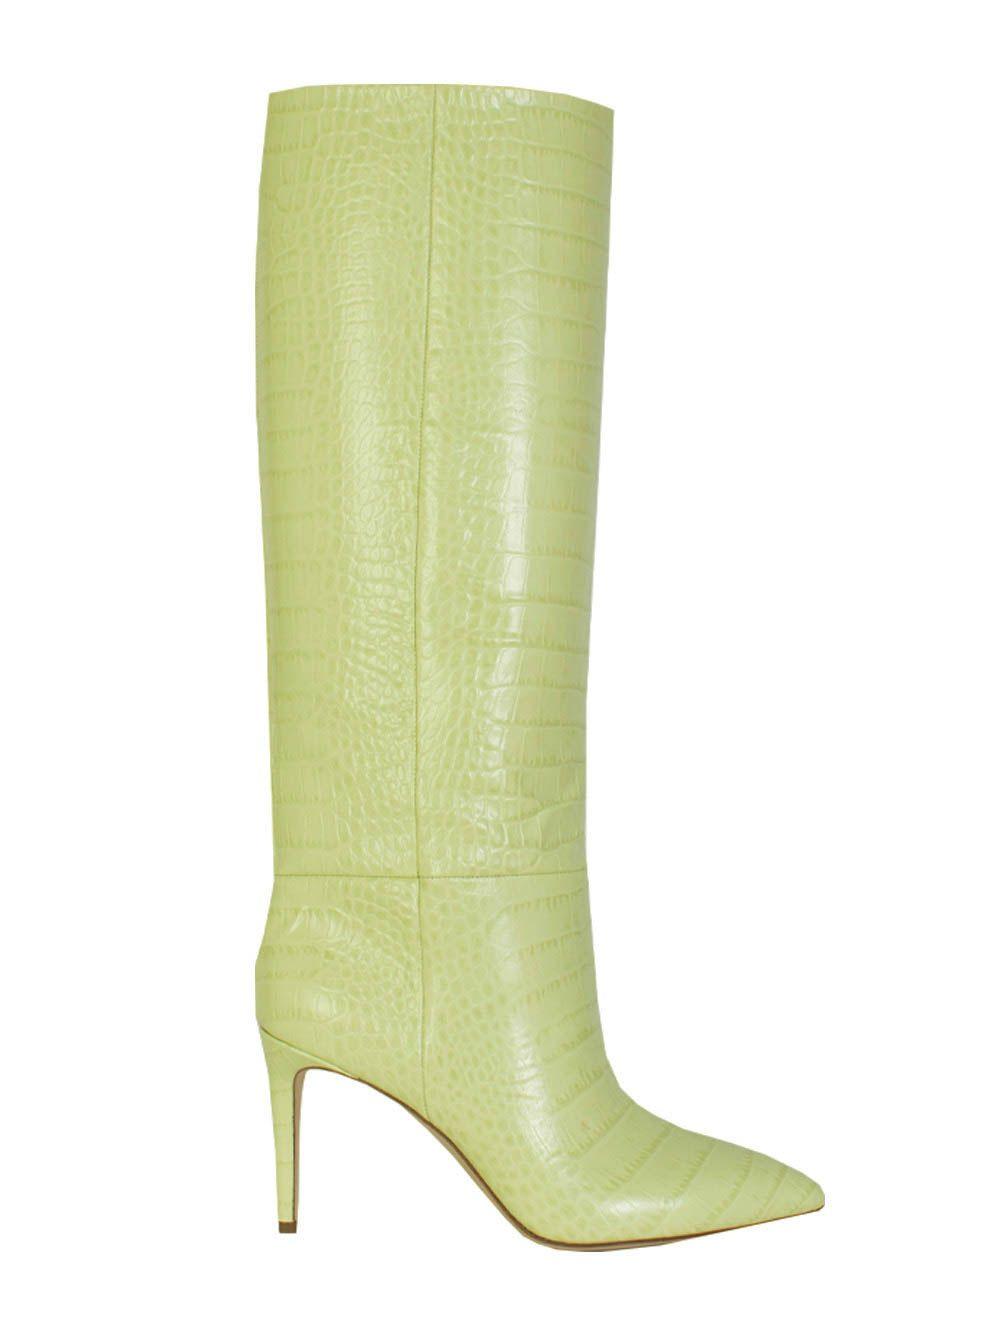 Paris Texas Croco Leather Print in Lime Stiletto 85 Boot - Ellie Belle